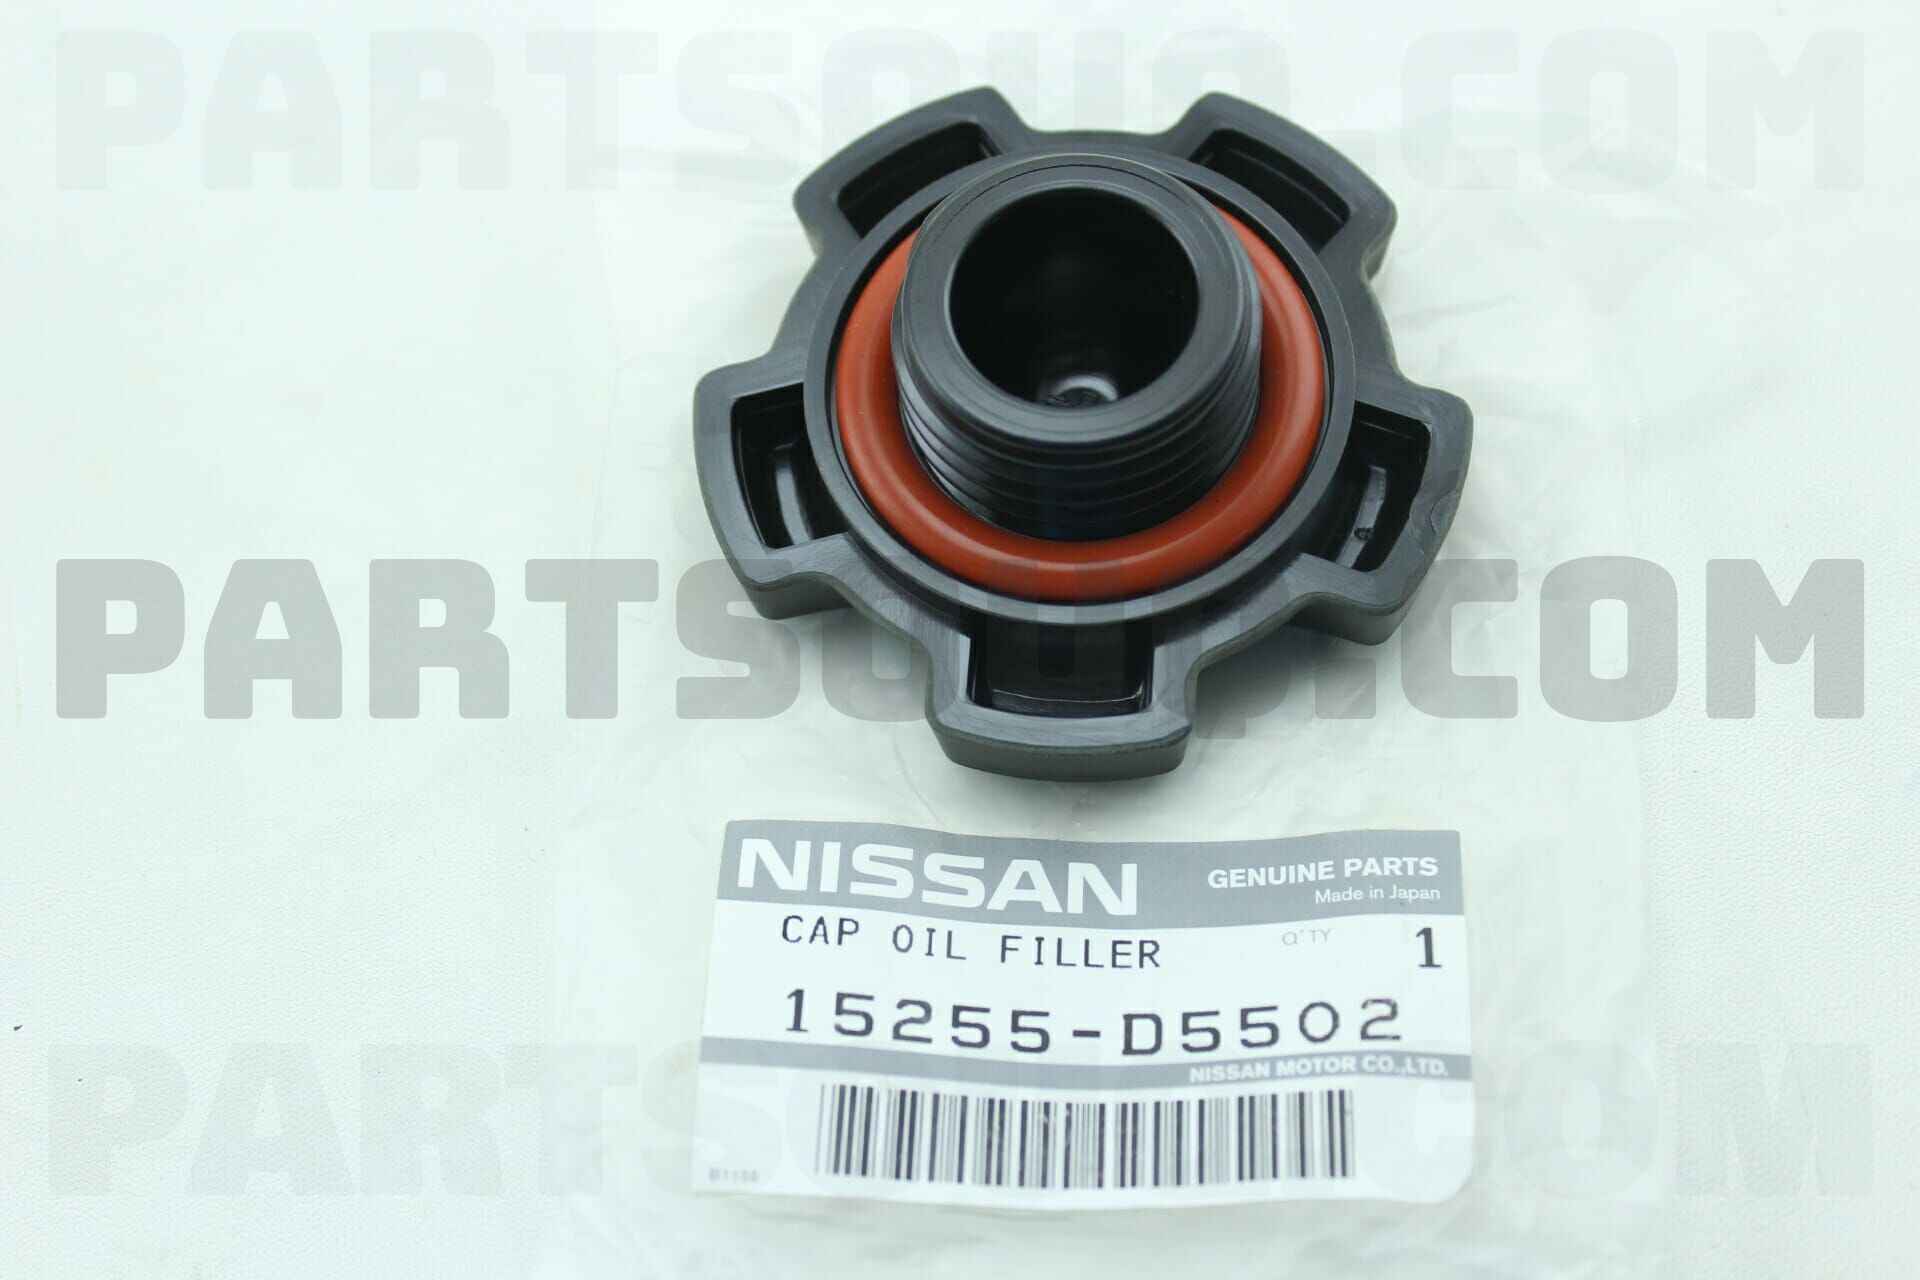 CAP ASSY-OIL FILLER 1525540F01 | Nissan Parts | PartSouq